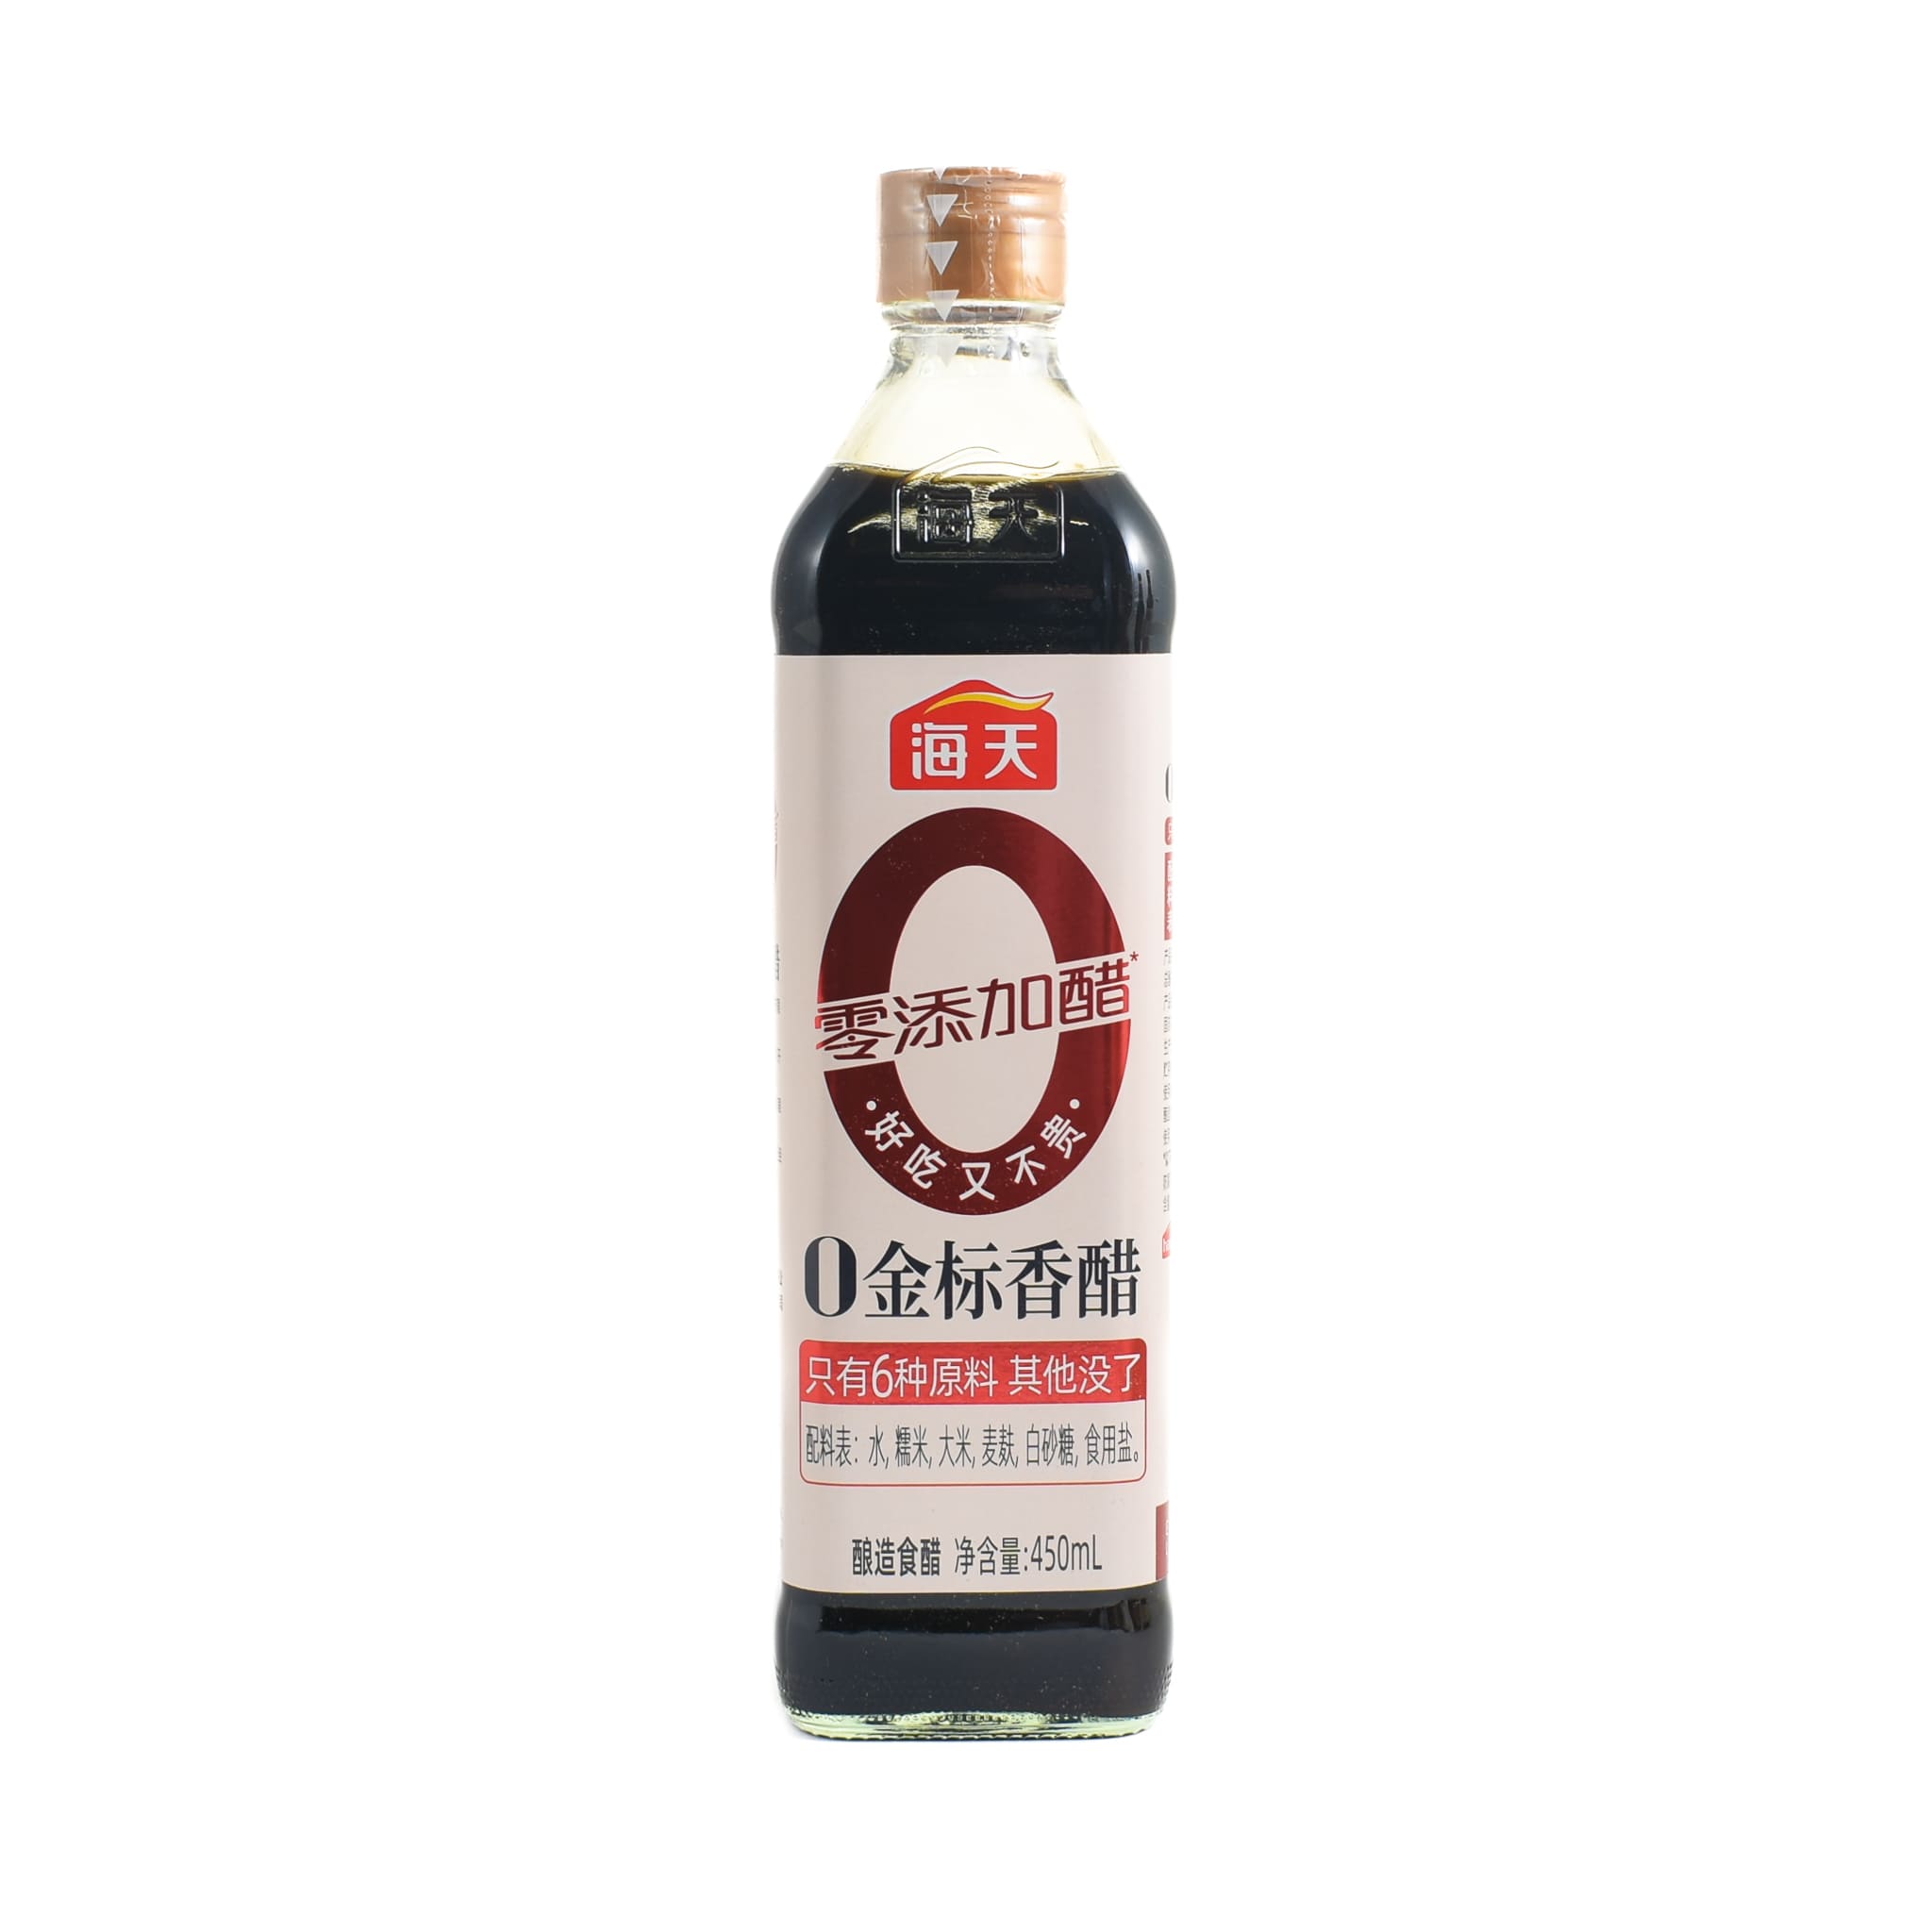 Aromatic Vinegar, 450ml